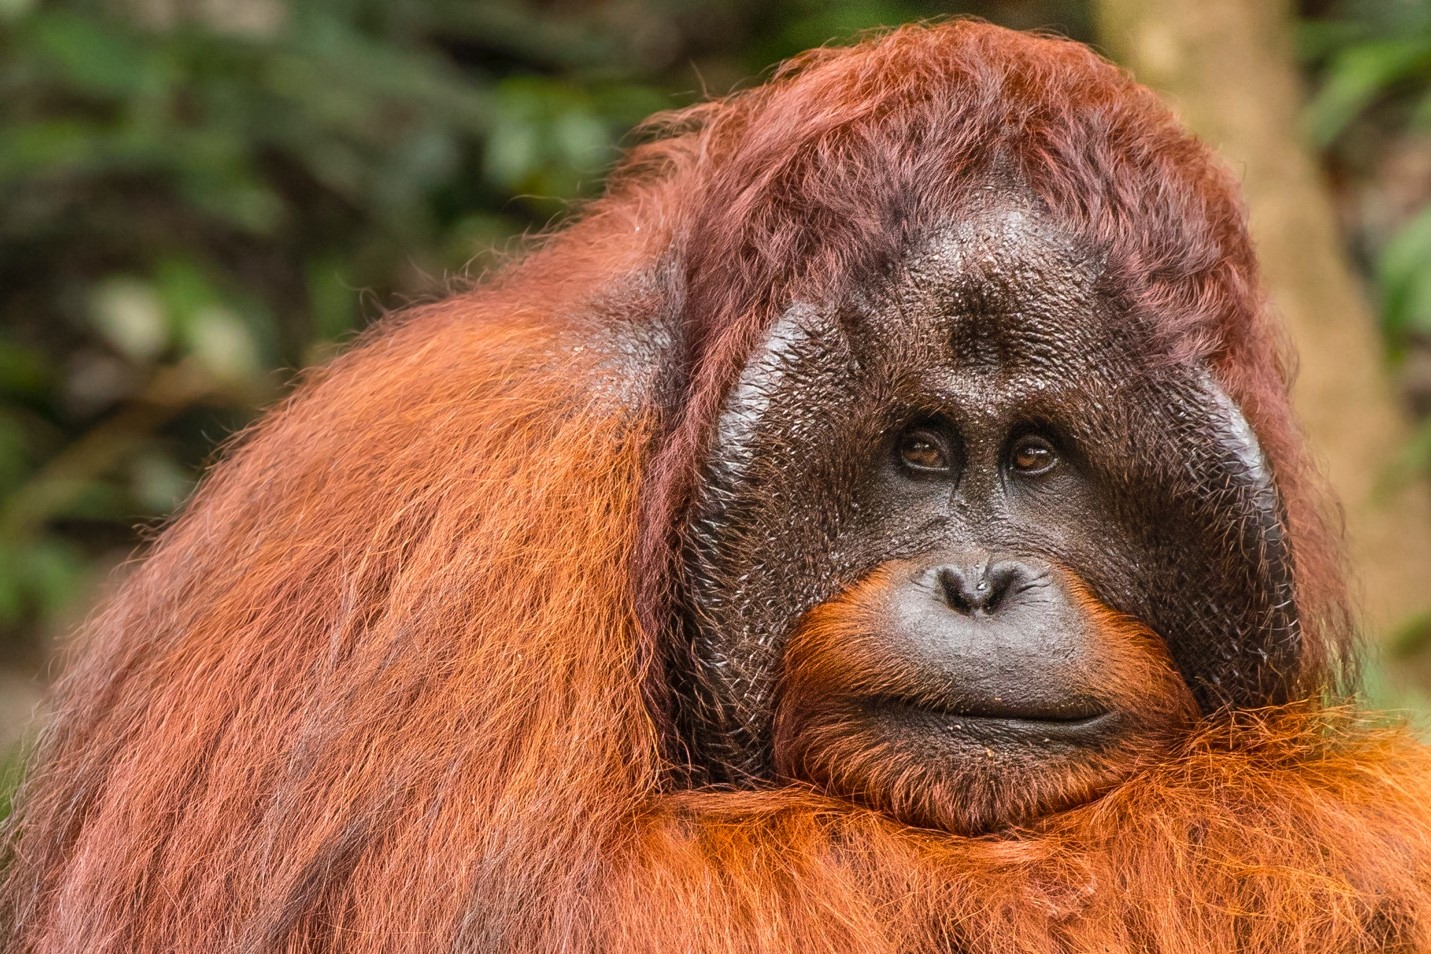 a large male orangutan sits at close range to the photographer